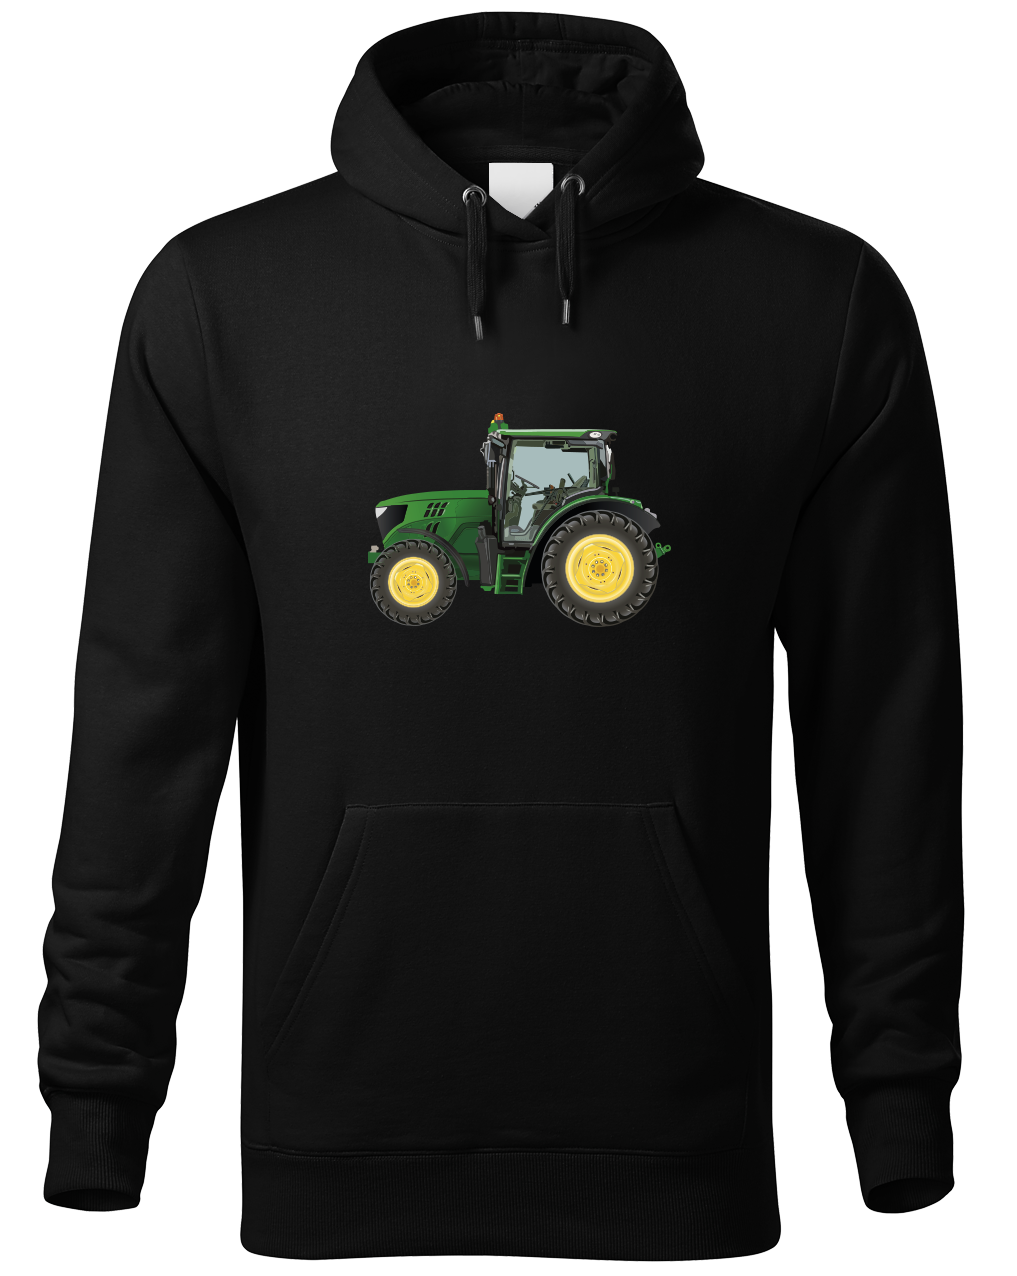 Mikina s traktorem - Zelený traktor Velikost: M, Barva: Černá